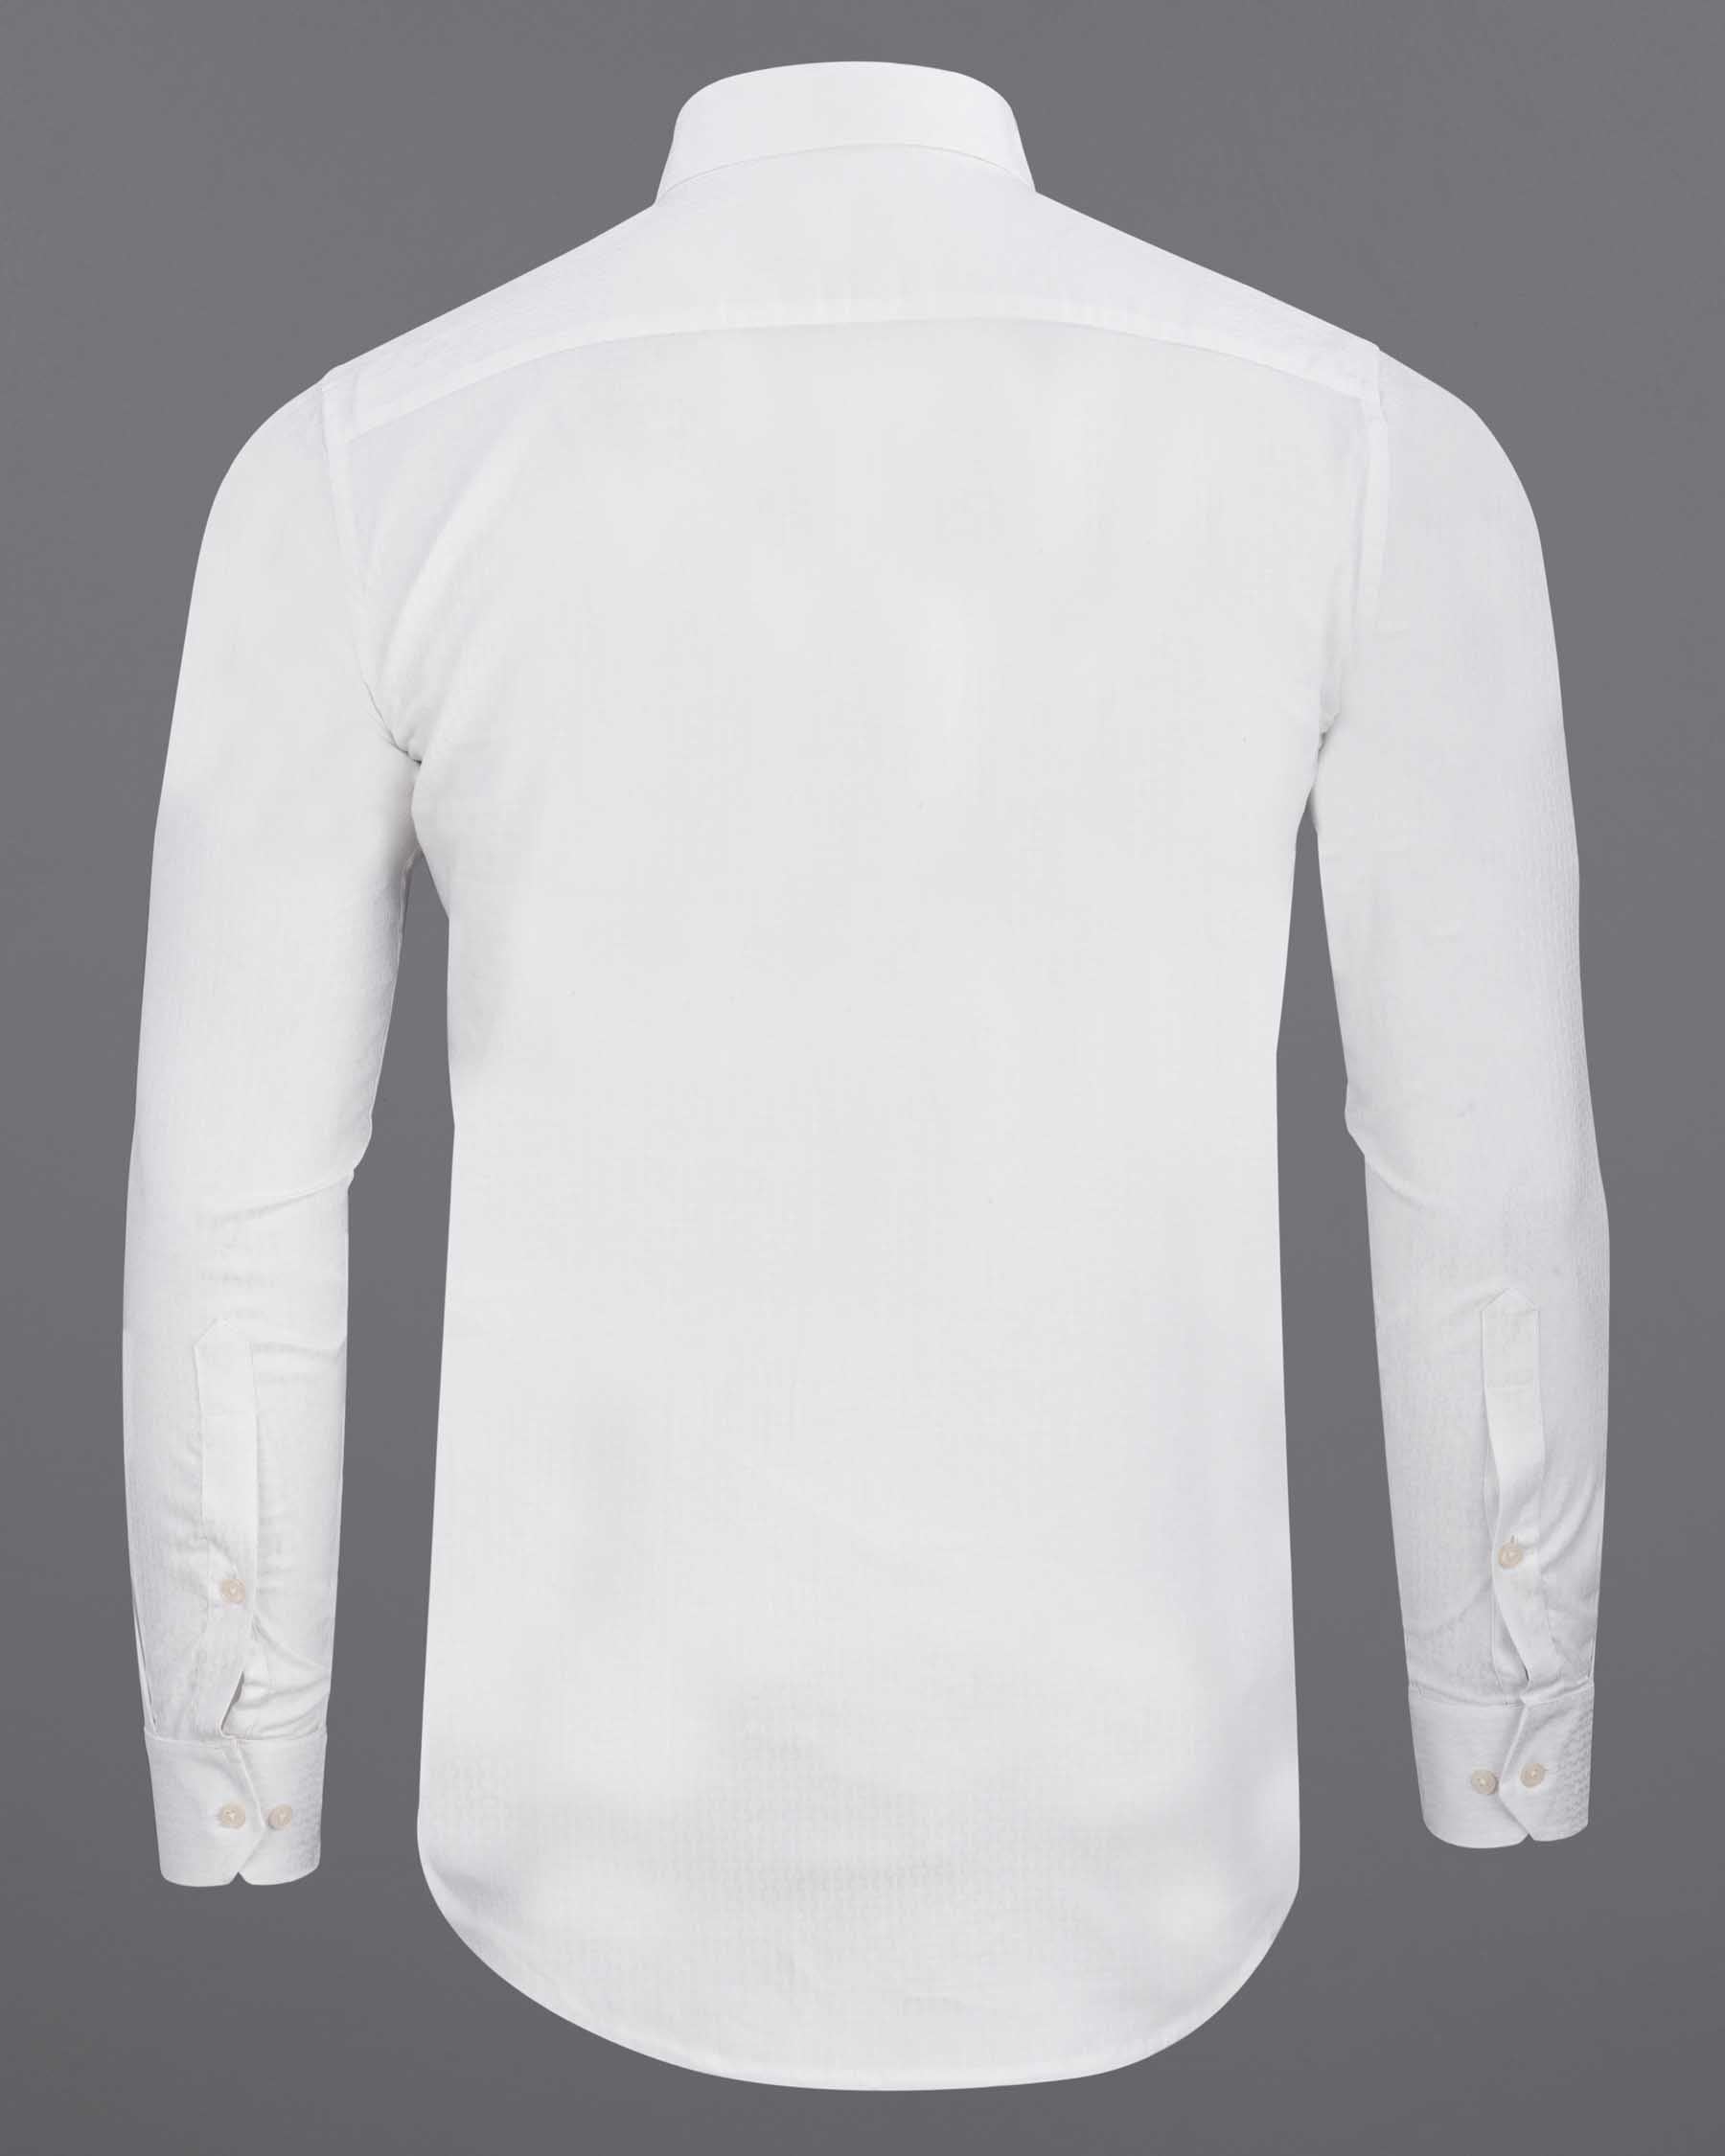 Bright White Dobby Textured Premium Giza Cotton Shirt 6343-38,6343-H-38,6343-39,6343-H-39,6343-40,6343-H-40,6343-42,6343-H-42,6343-44,6343-H-44,6343-46,6343-H-46,6343-48,6343-H-48,6343-50,6343-H-50,6343-52,6343-H-52